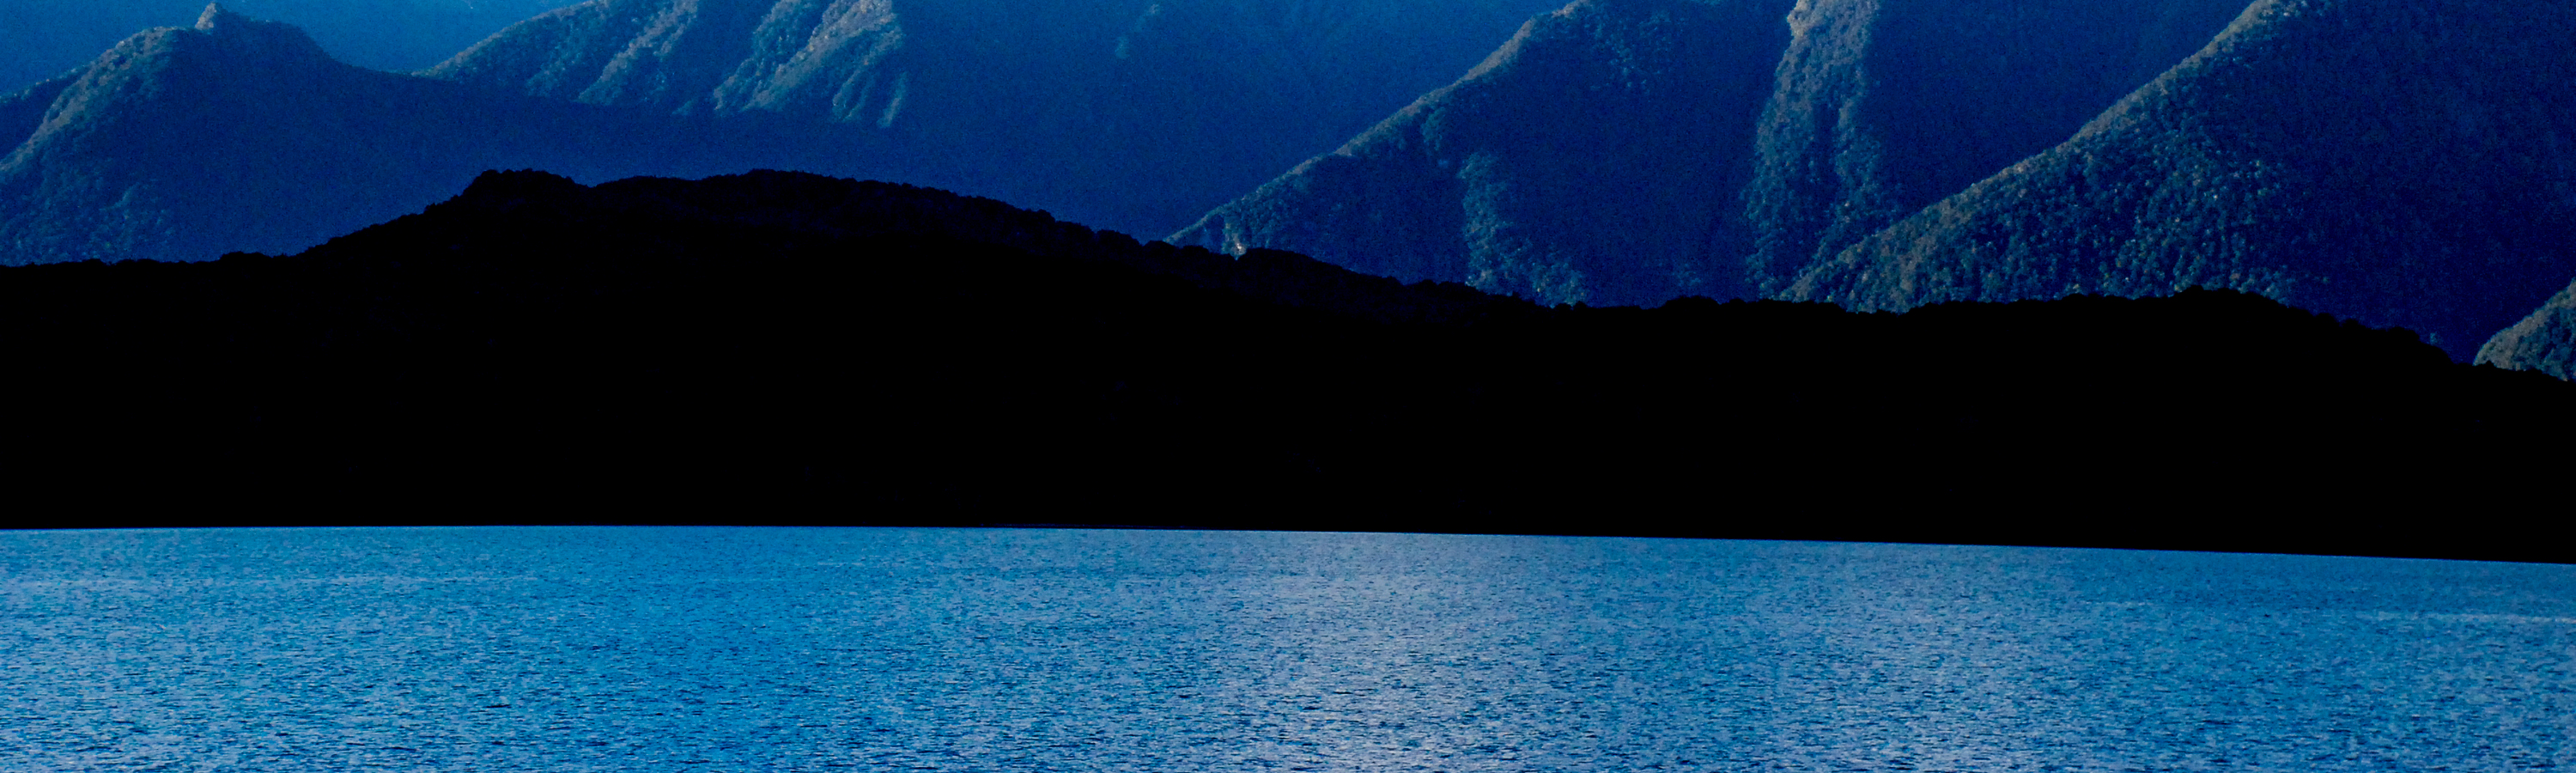 Lake Te Anau, New Zealand (2007)